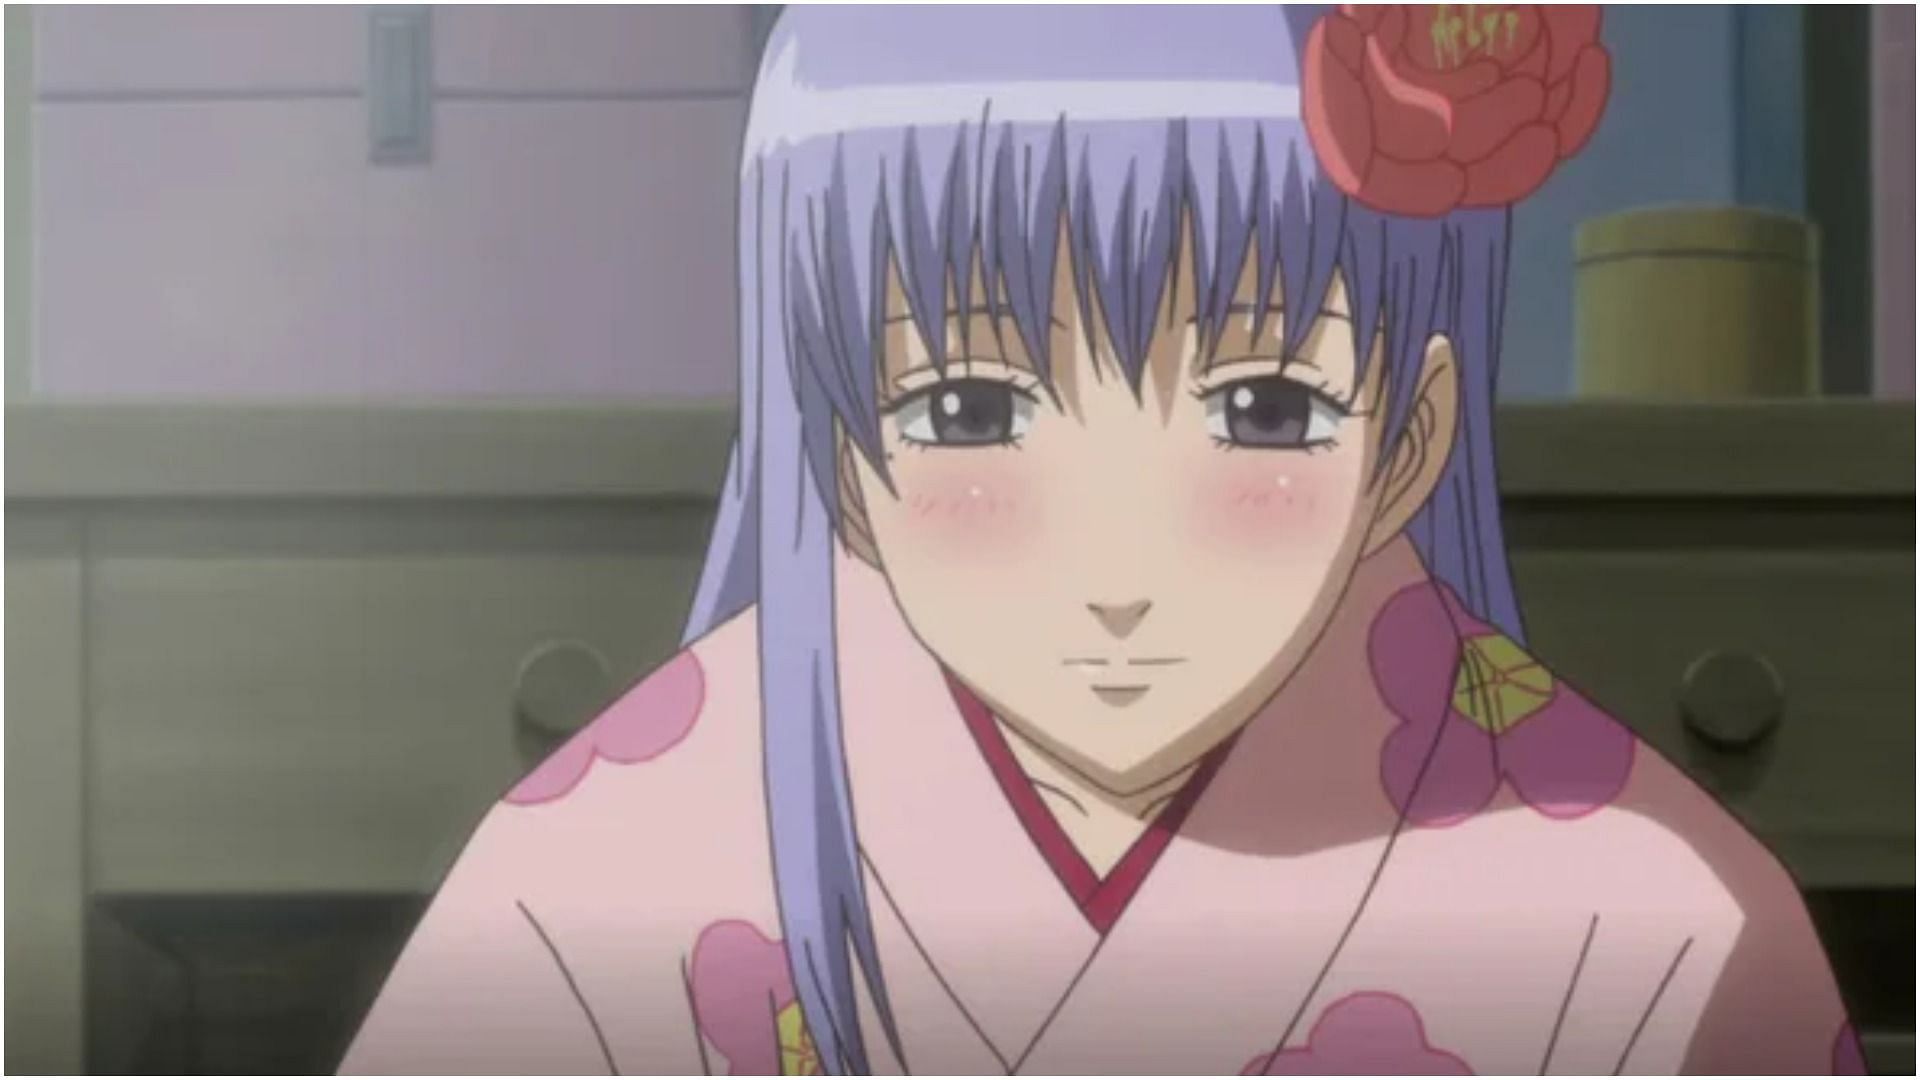 Sarutobi Ayame/Sacchan as seen in the anime Gintama (Image via Bandai Namco Pictures)